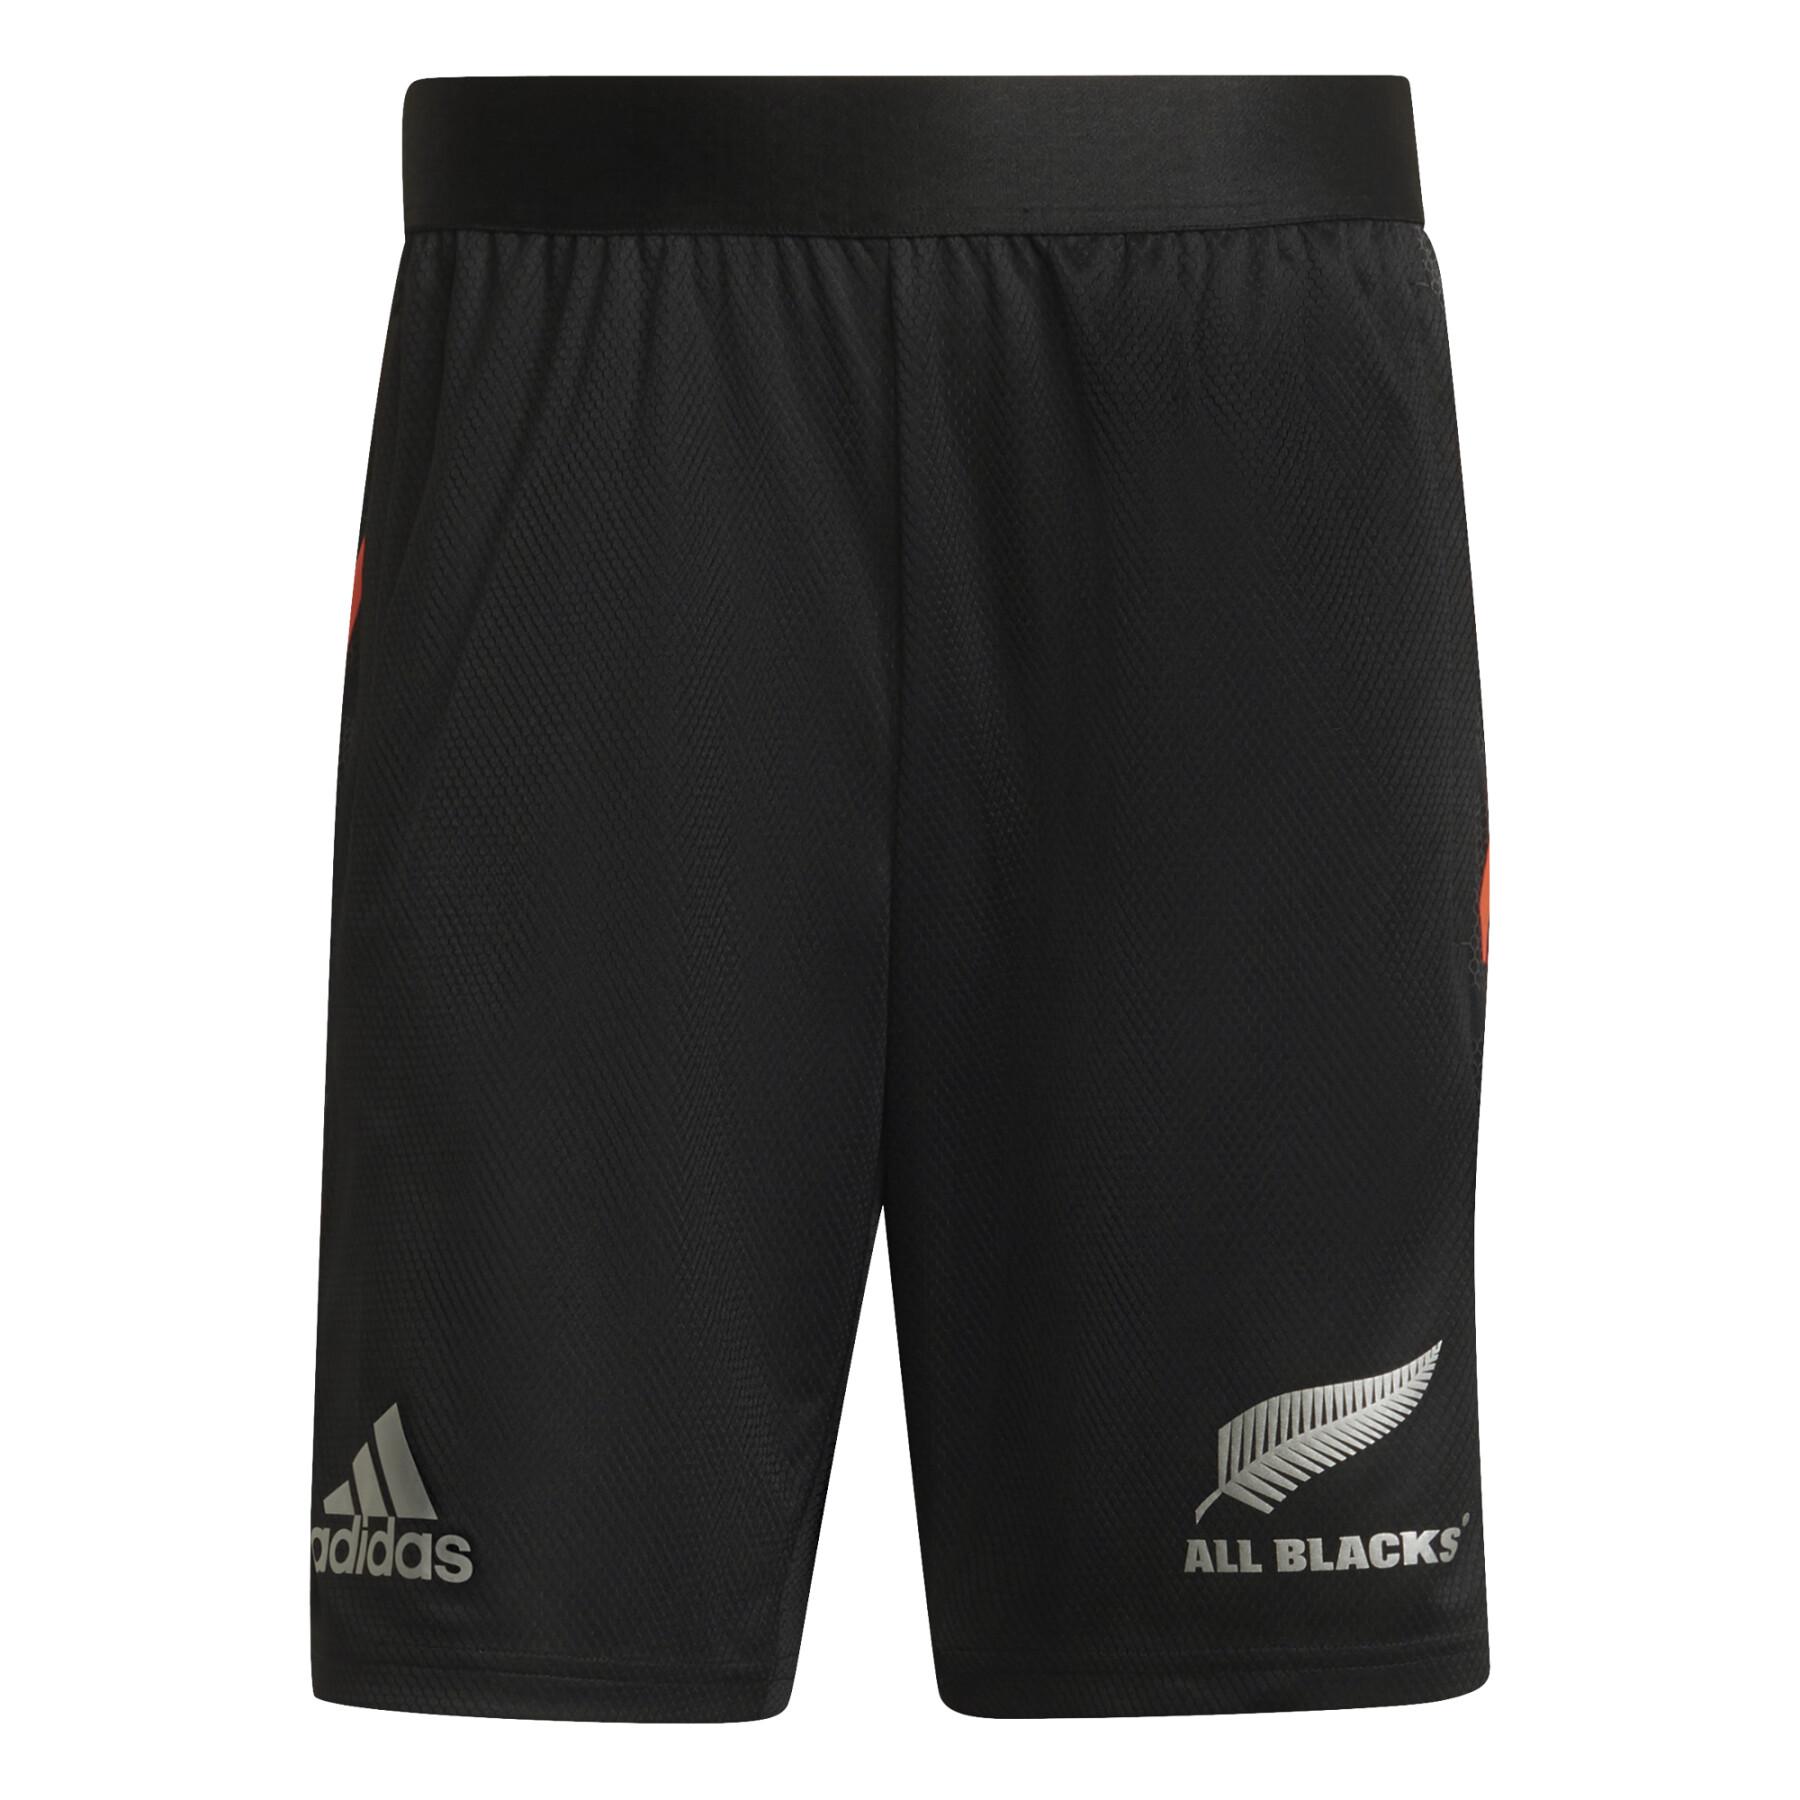 Short adidas All Blacks Primeblue Gym